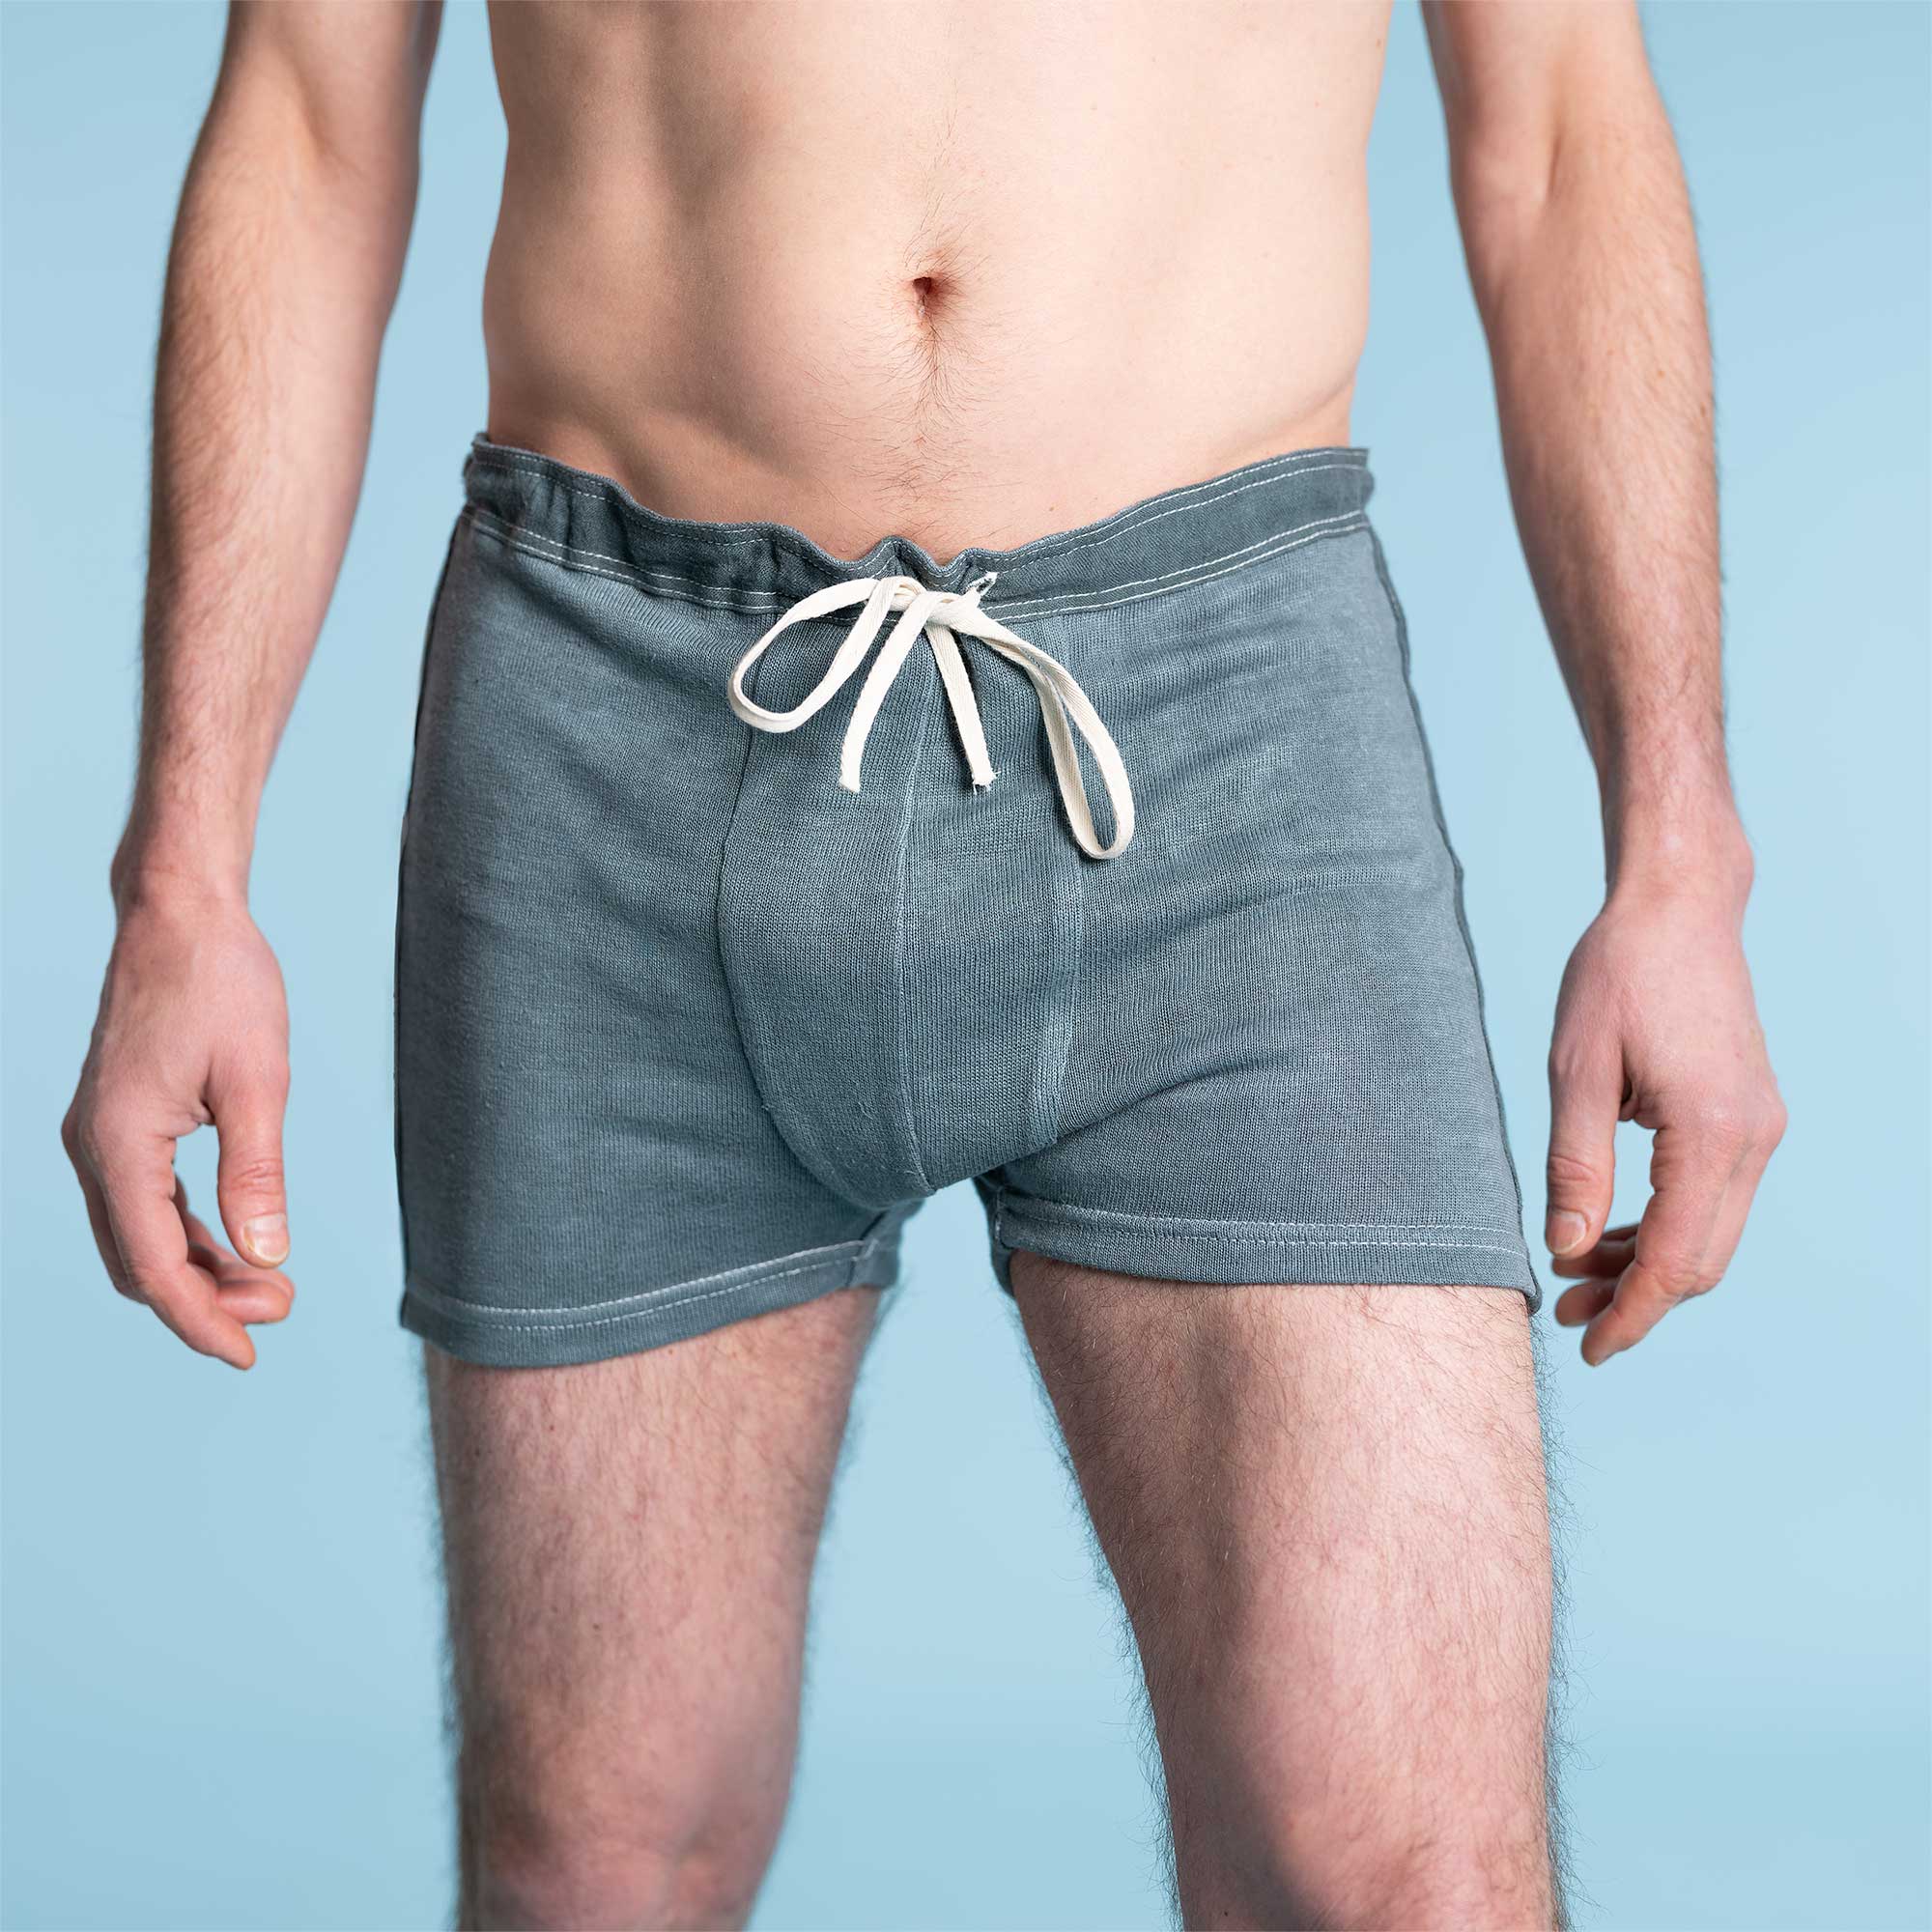 French Cut Panties // Hemp & Organic Cotton // Soft Comfort // Hemp  Underwear // Eco Fashion 